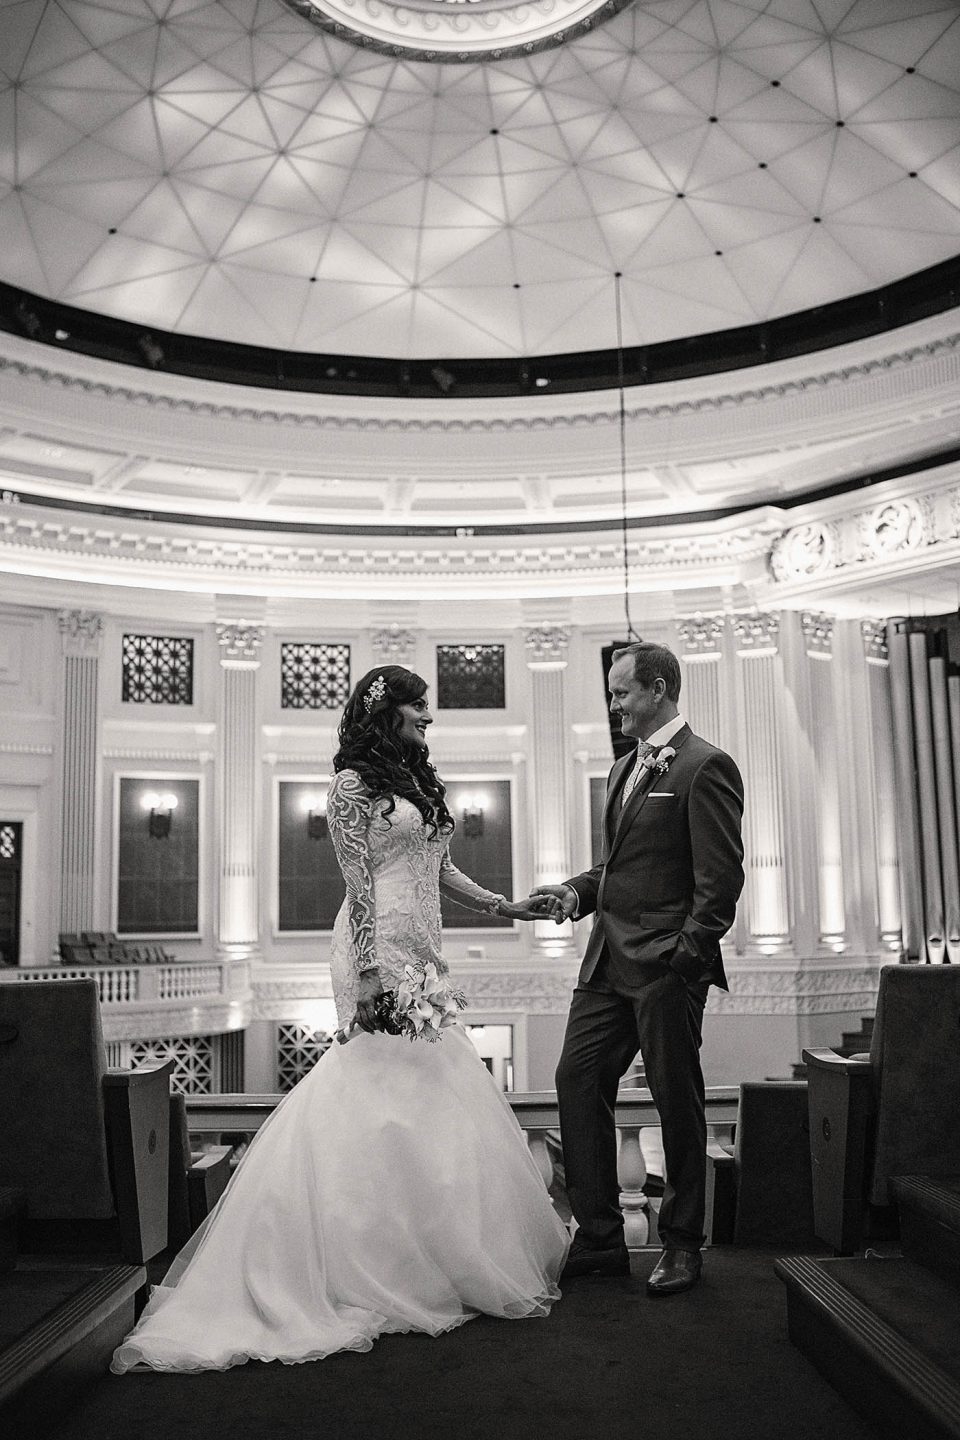 Wedding Photo taken at Brisbane City Hall